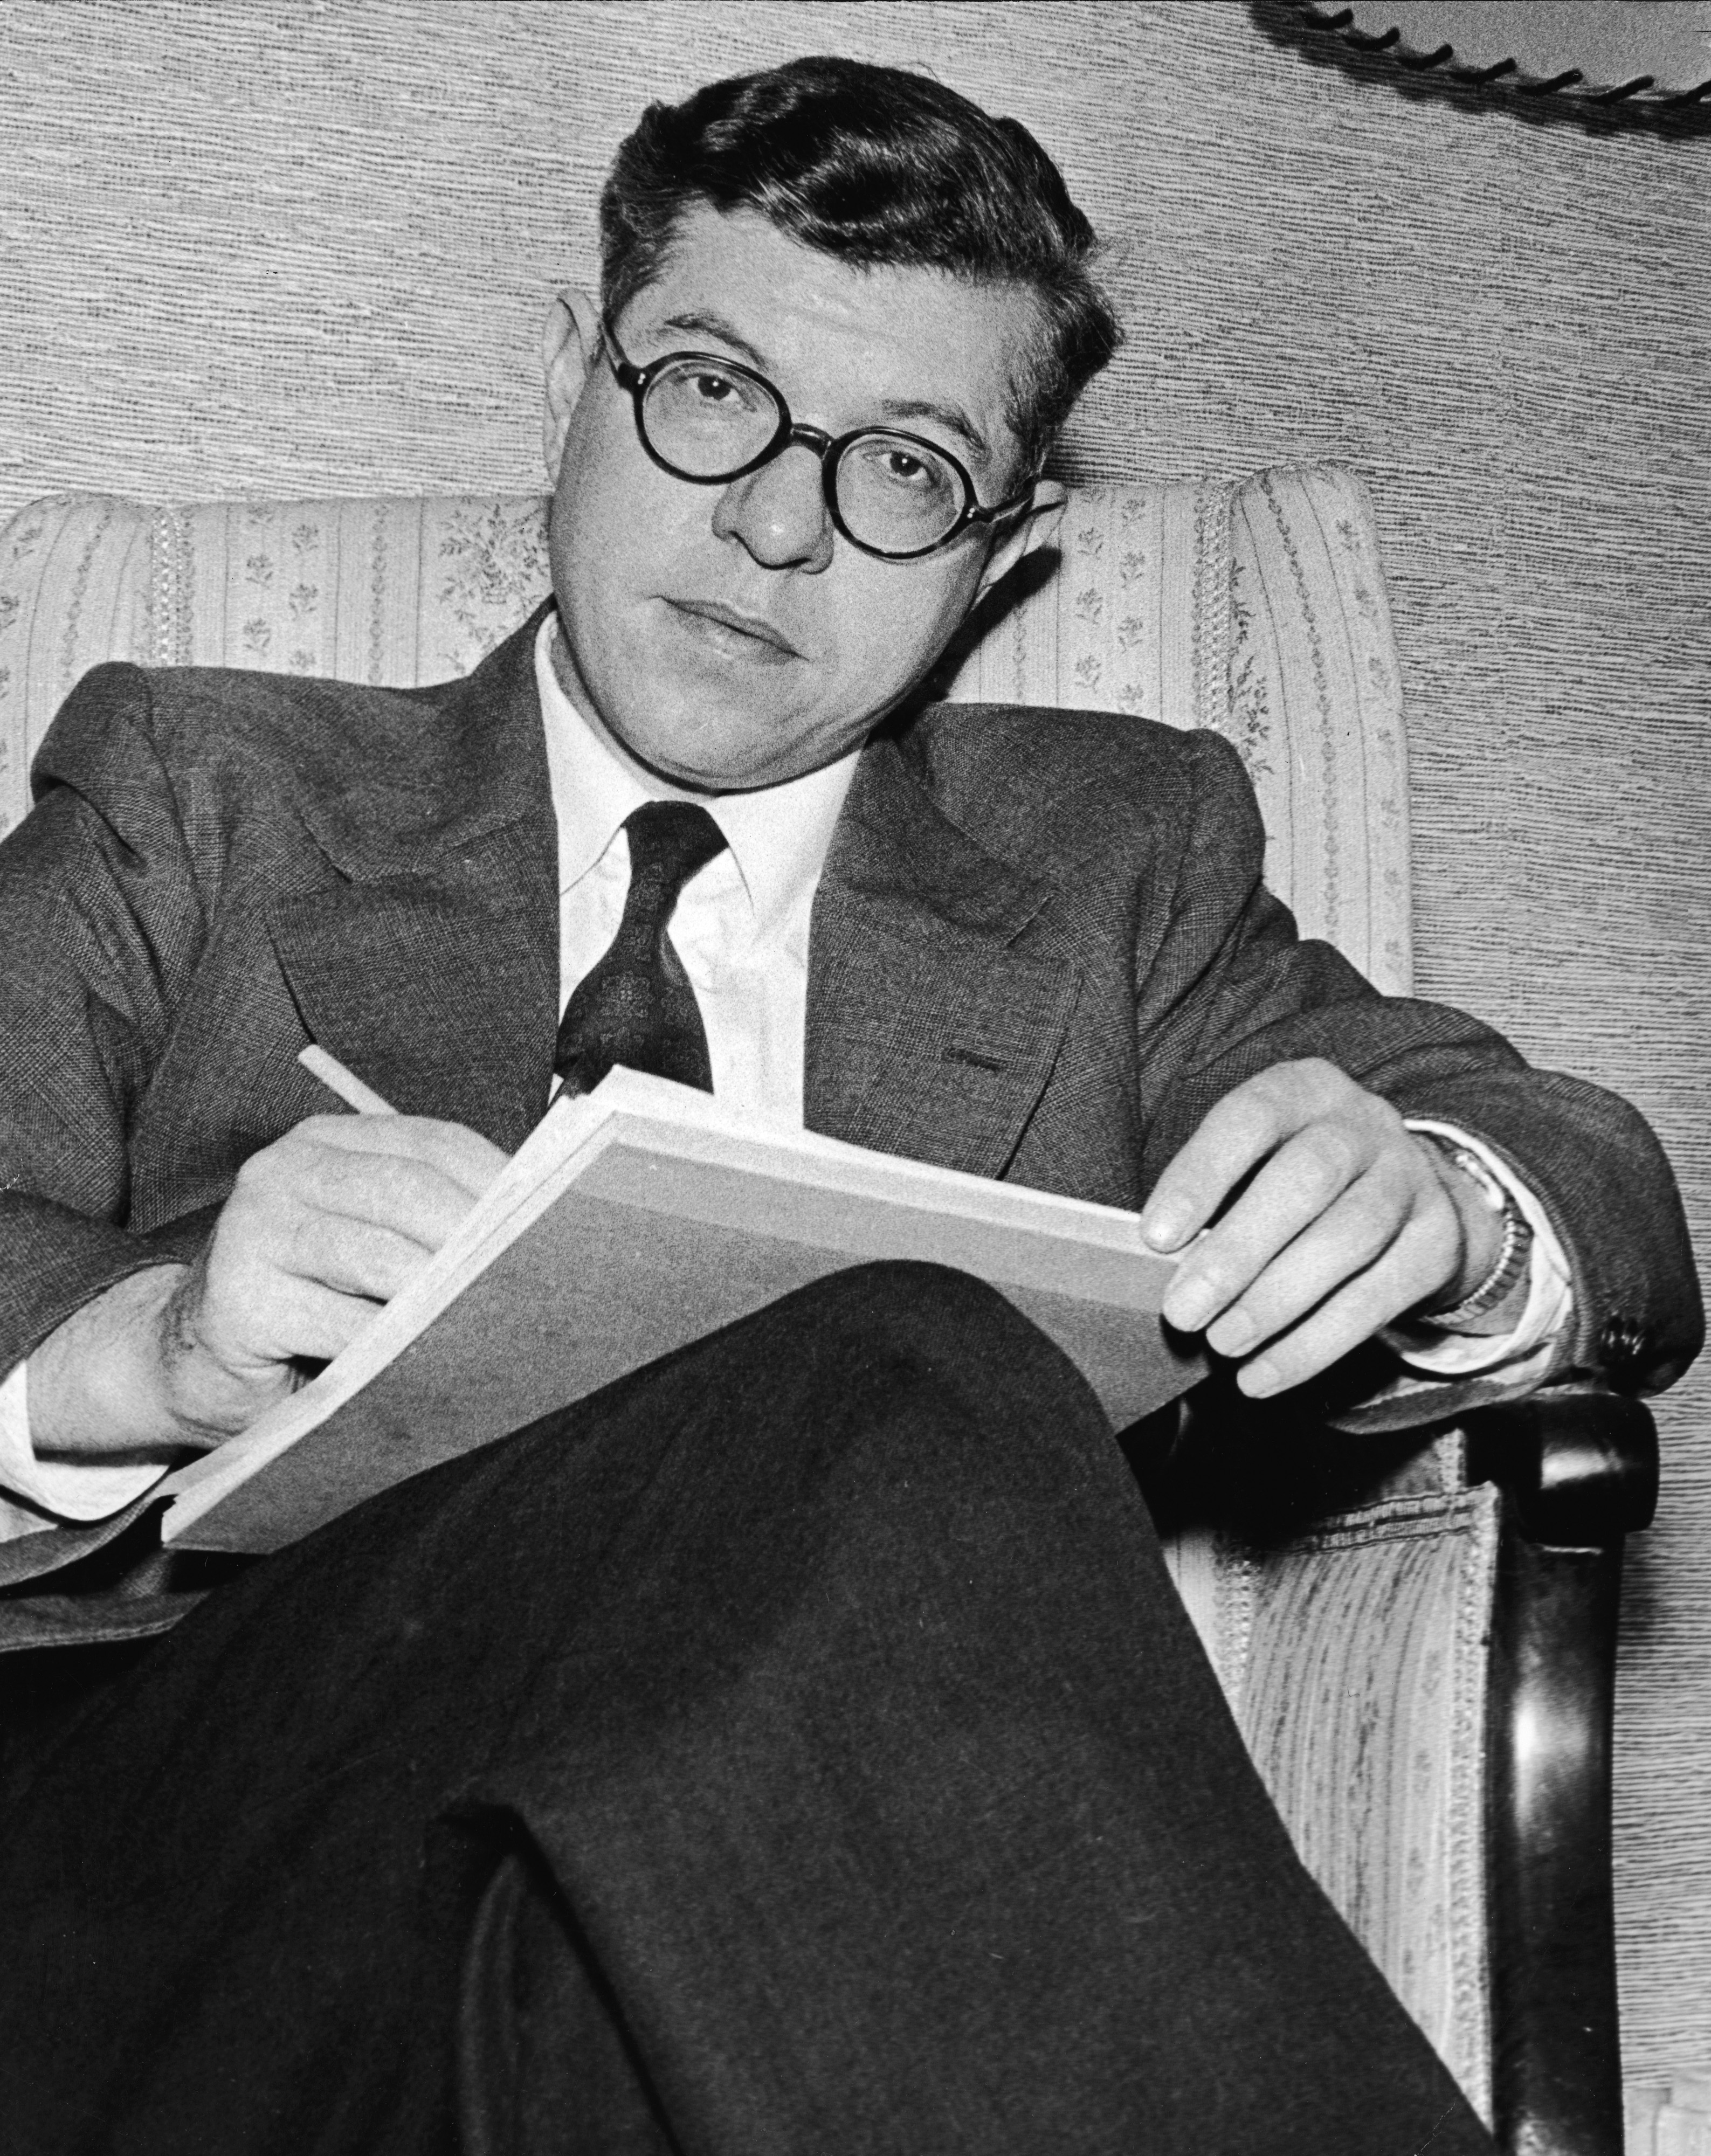 Fred Hoyle, birth anniversary